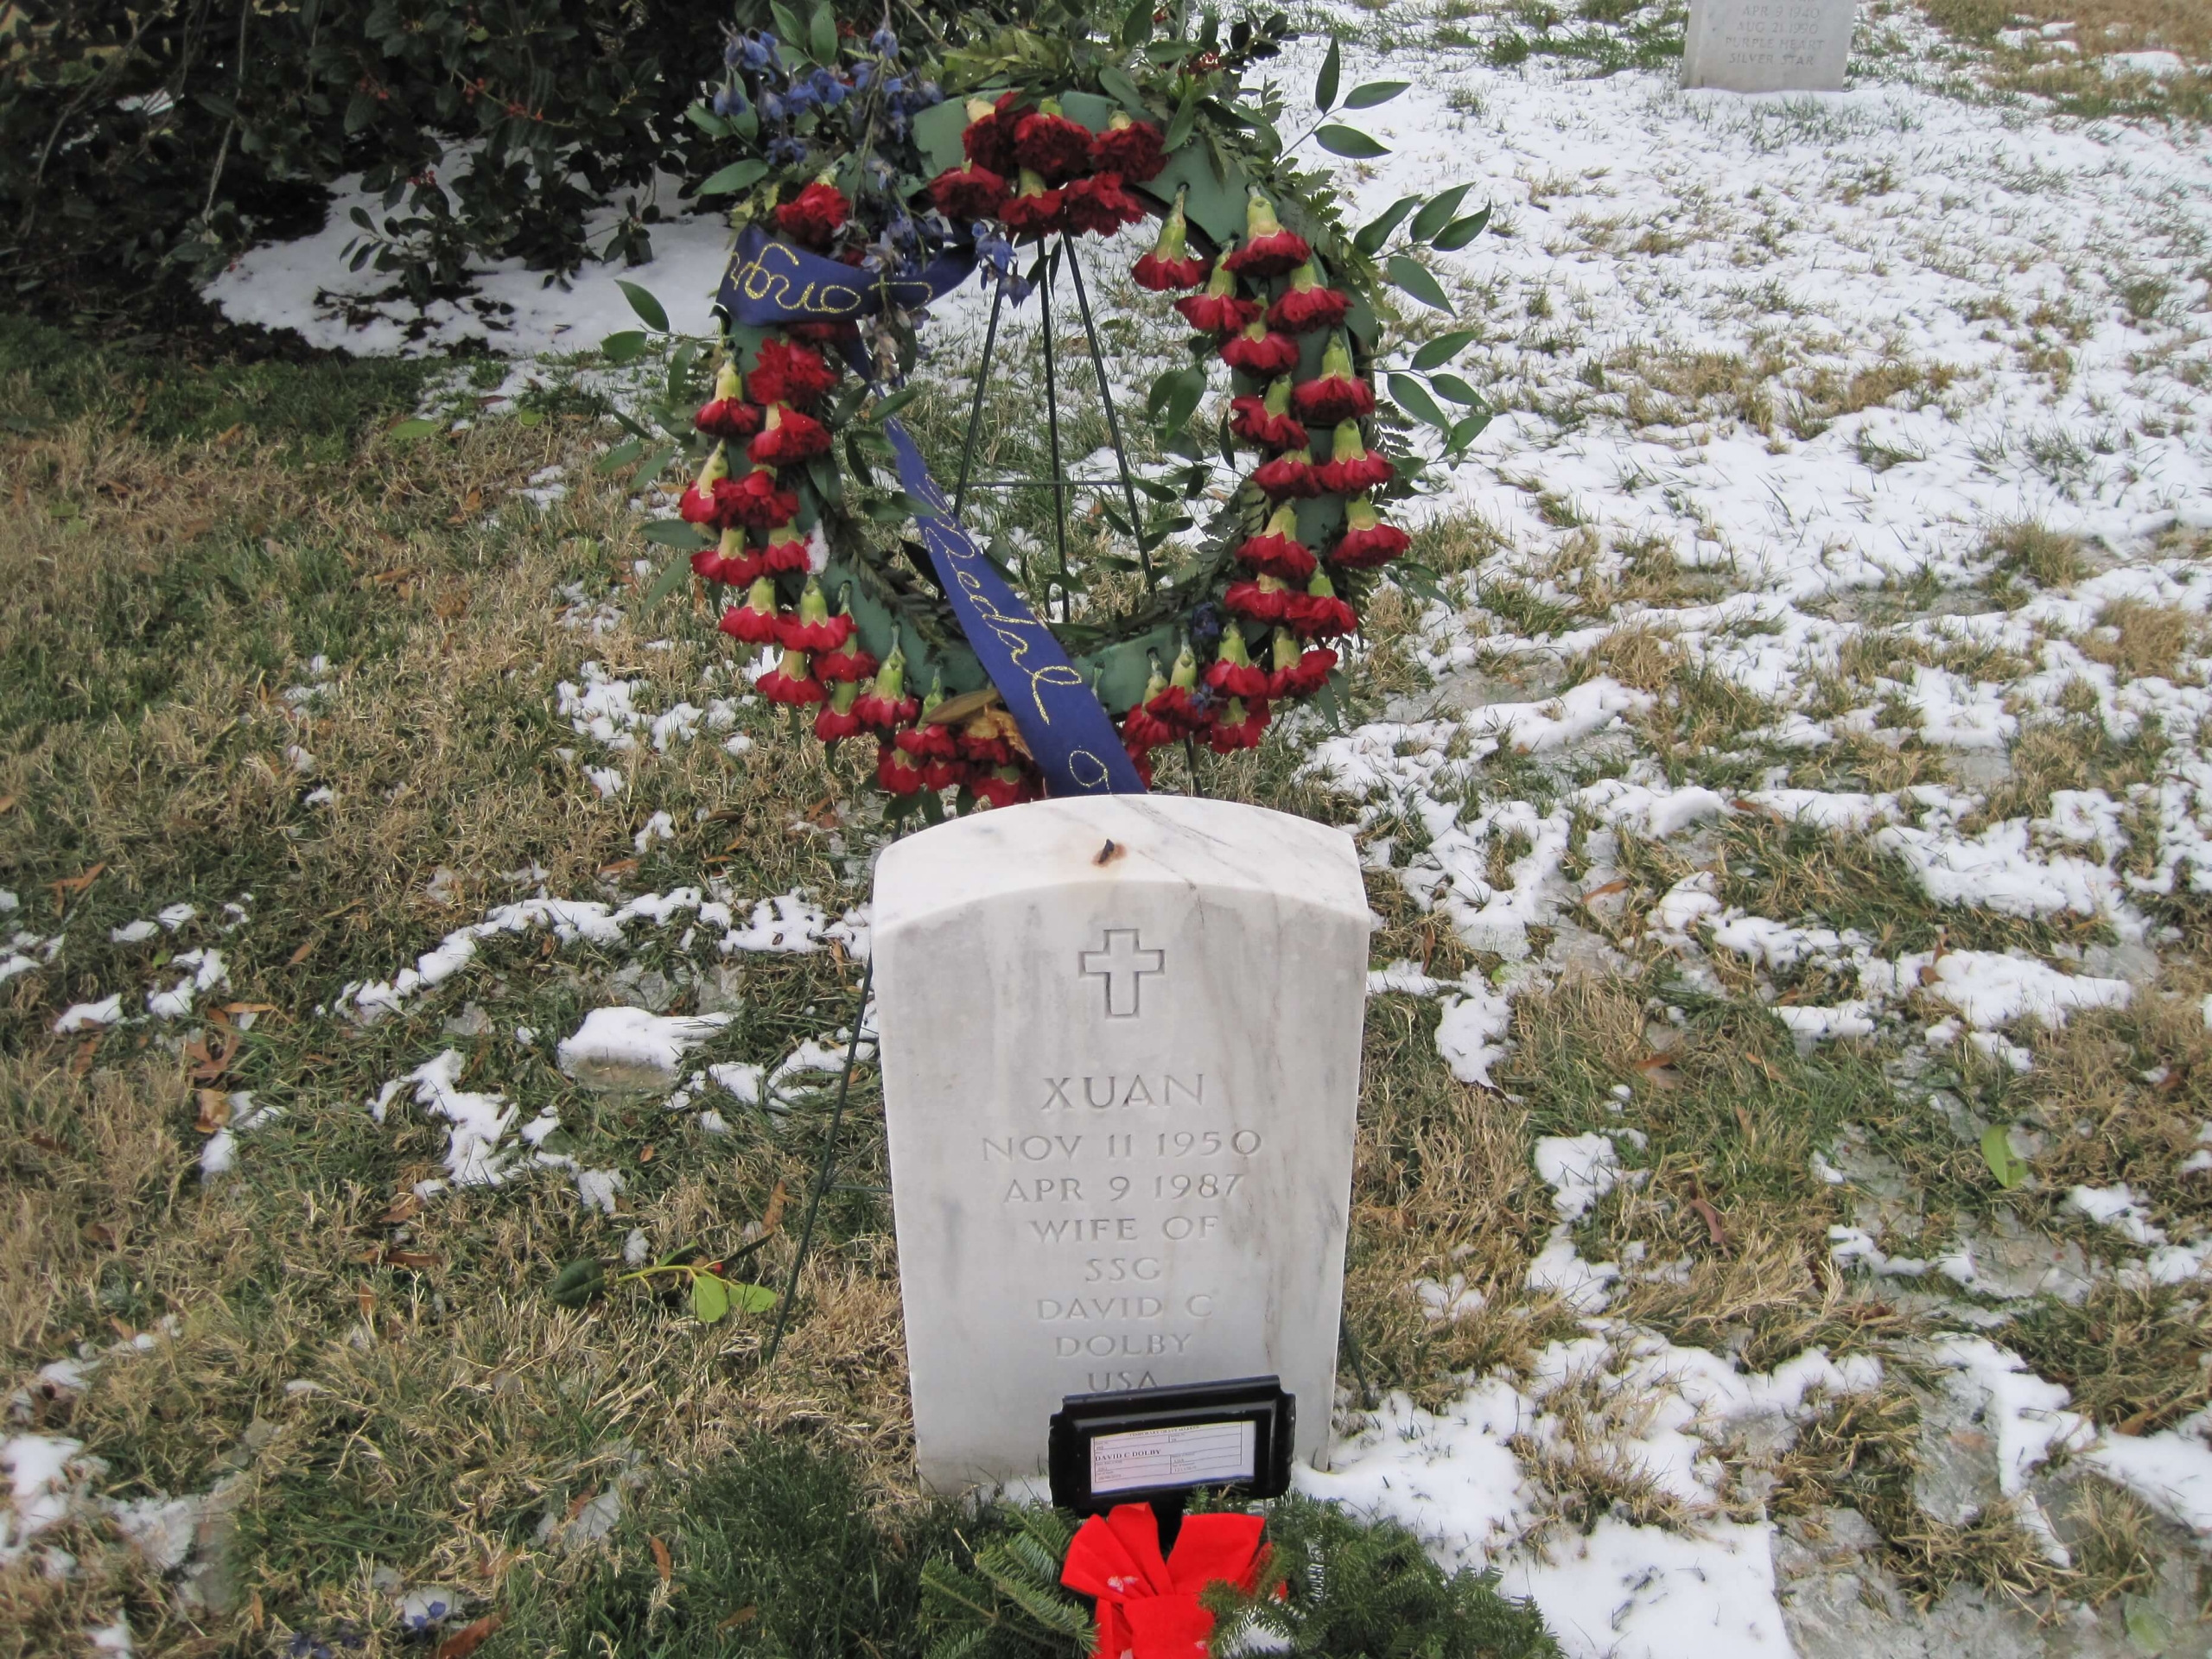 dcdolby-gravesite-photo-by-eileen-horan-december-2010-004